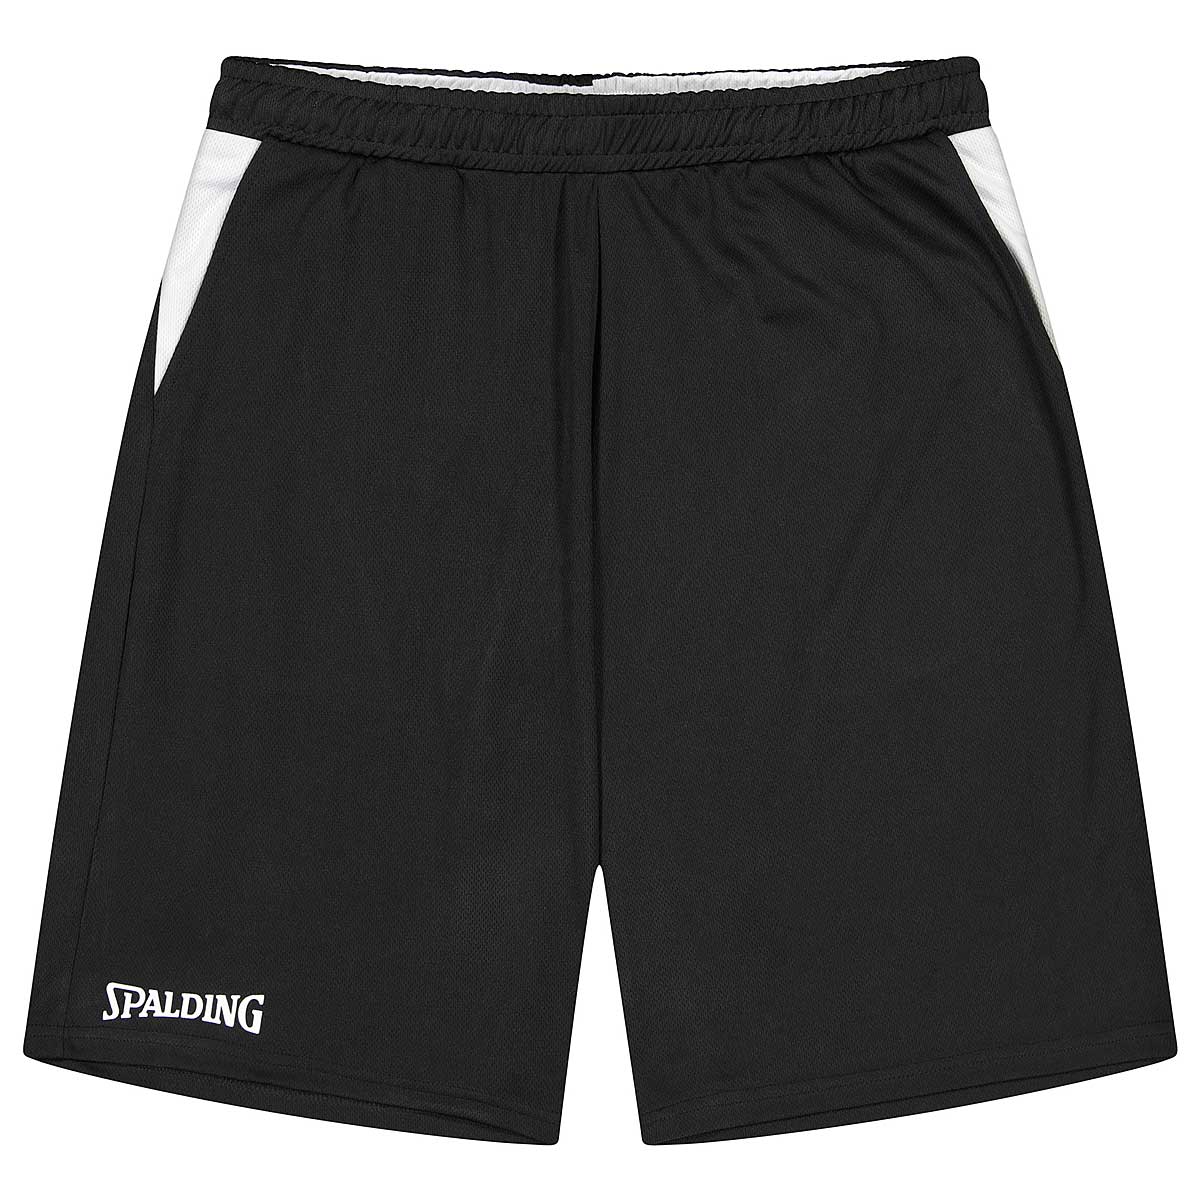 Spalding Active Shorts, Black